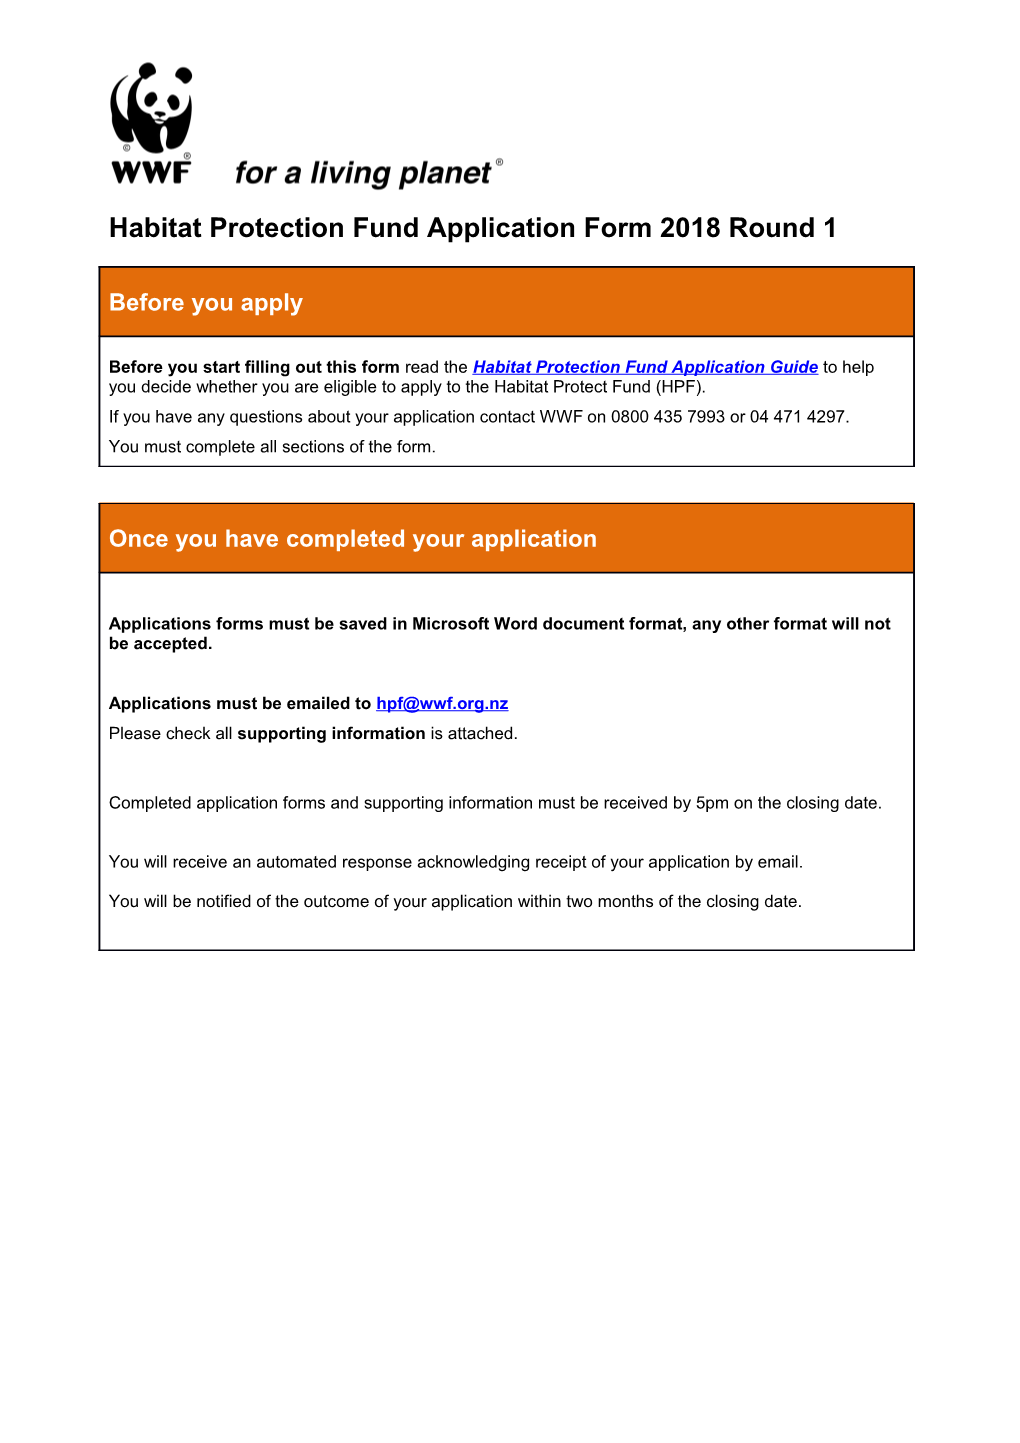 Habitat Protection Fundapplication Form 2018 Round 1